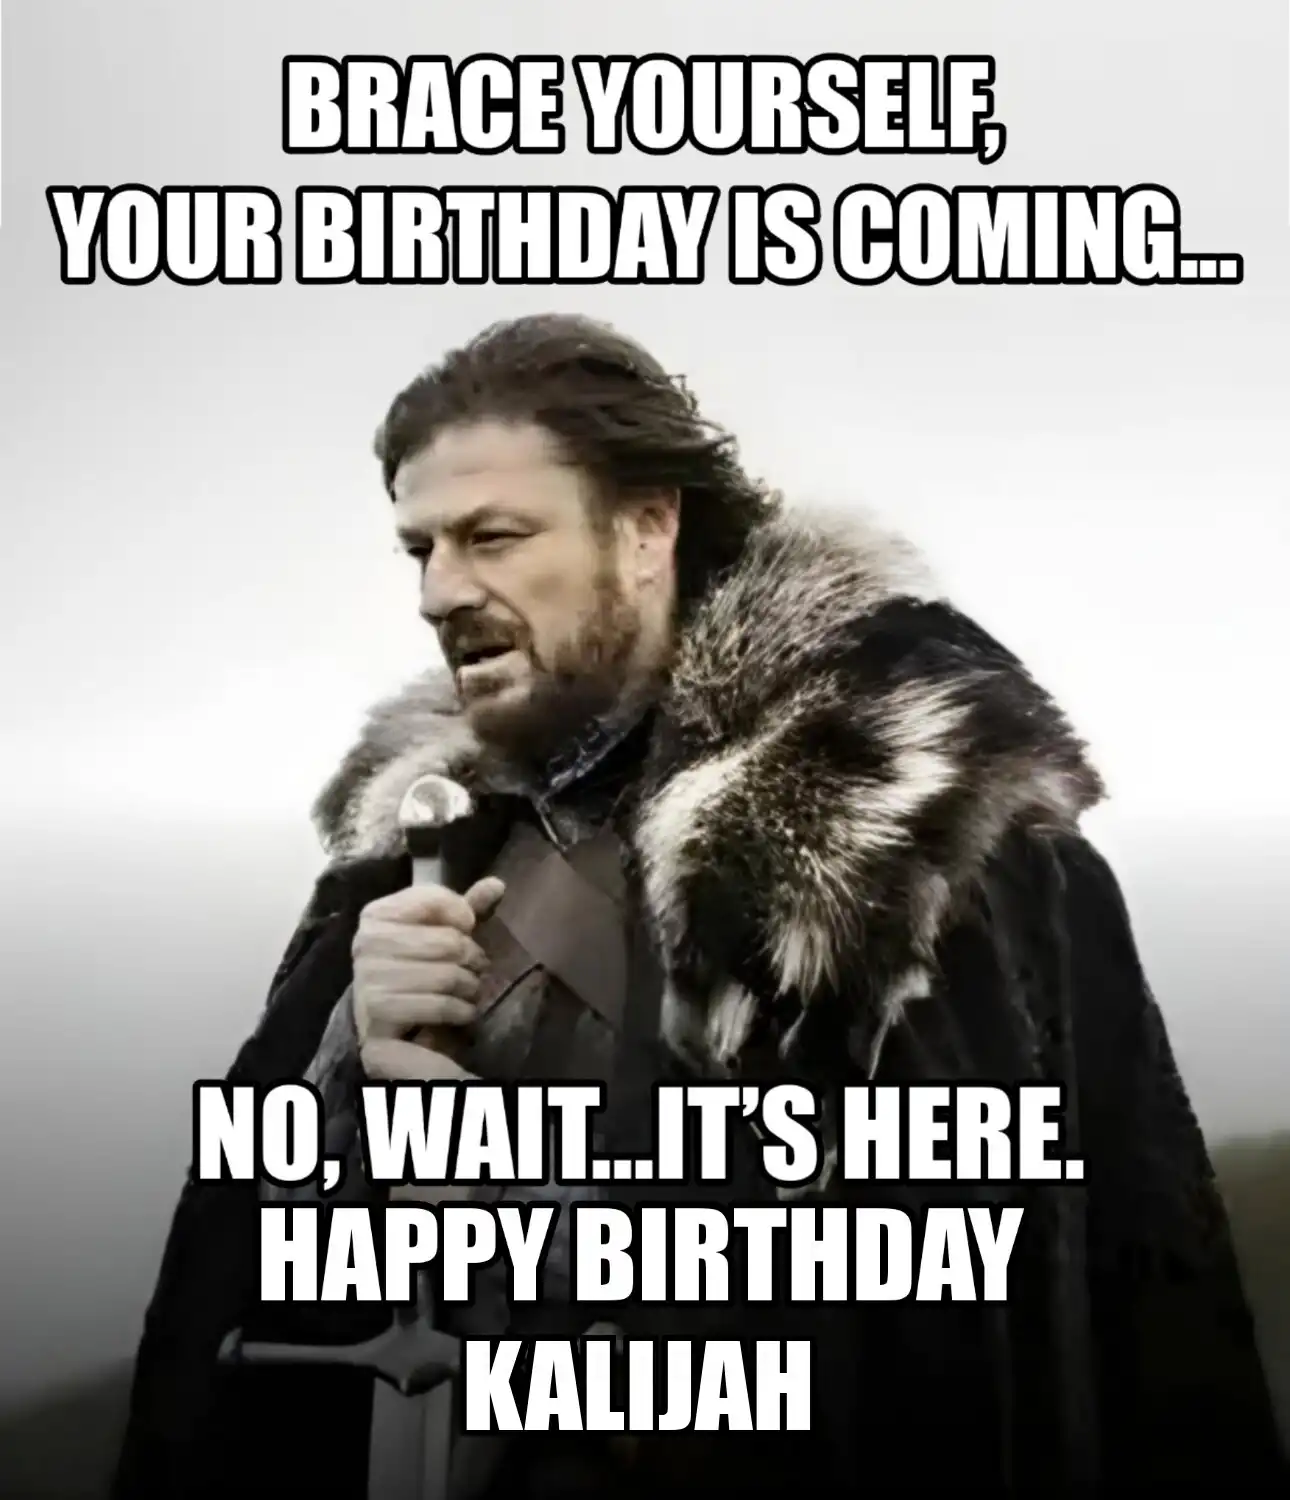 Happy Birthday Kalijah Brace Yourself Your Birthday Is Coming Meme